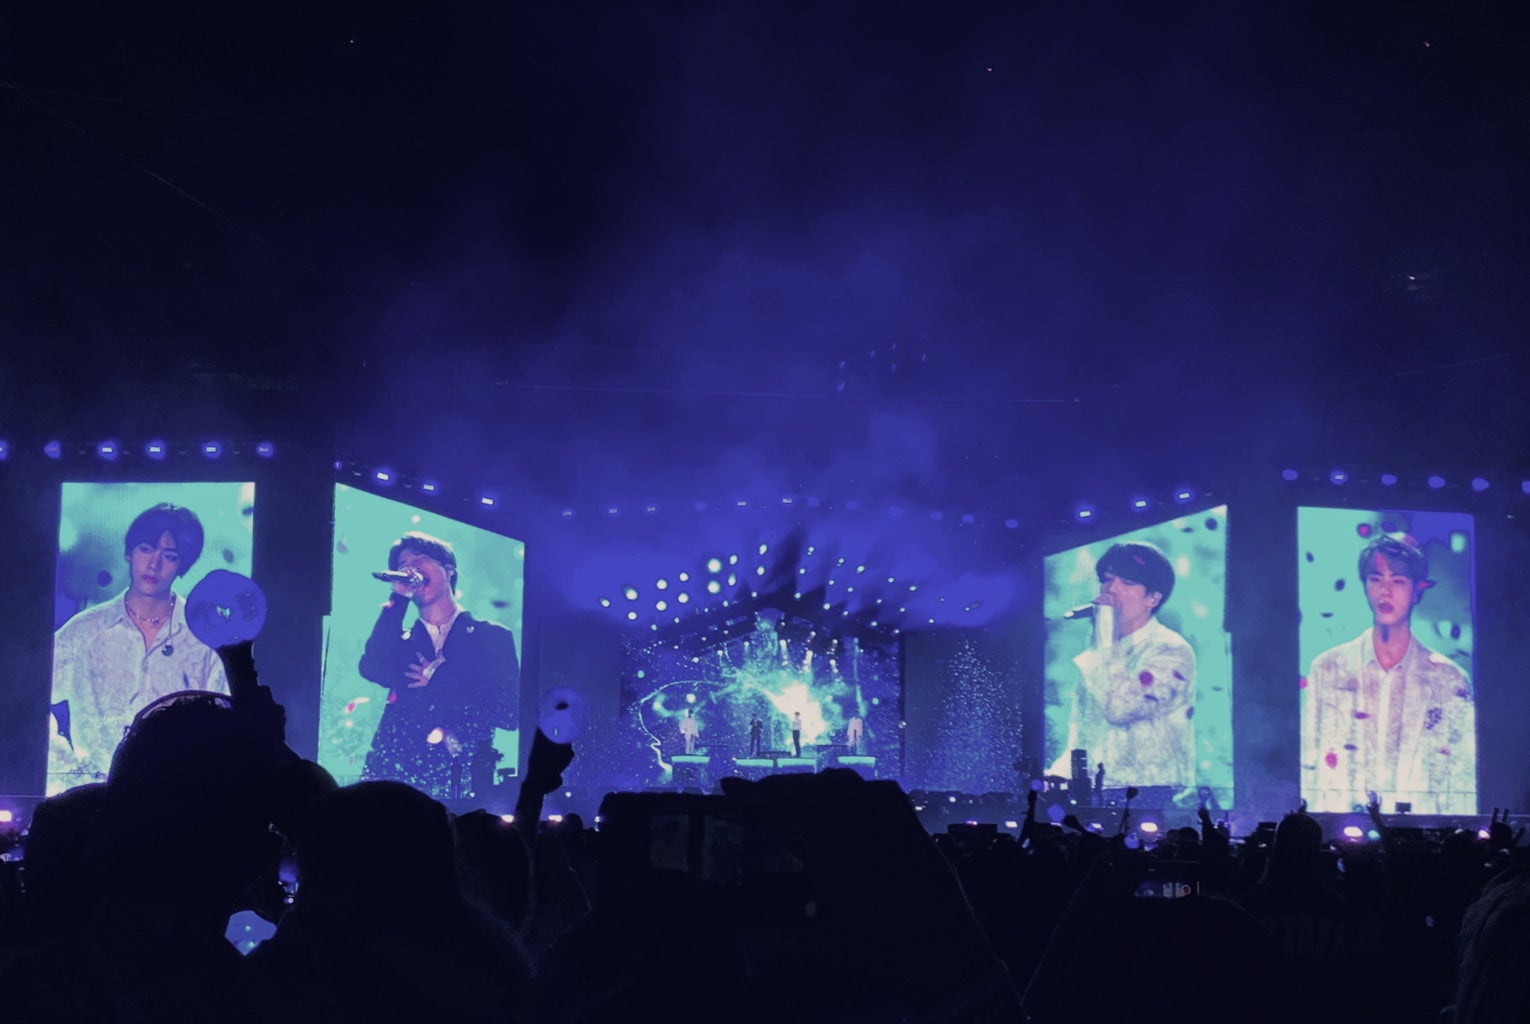 Vocal line of kpop band BTS perform at MetLife Stadium